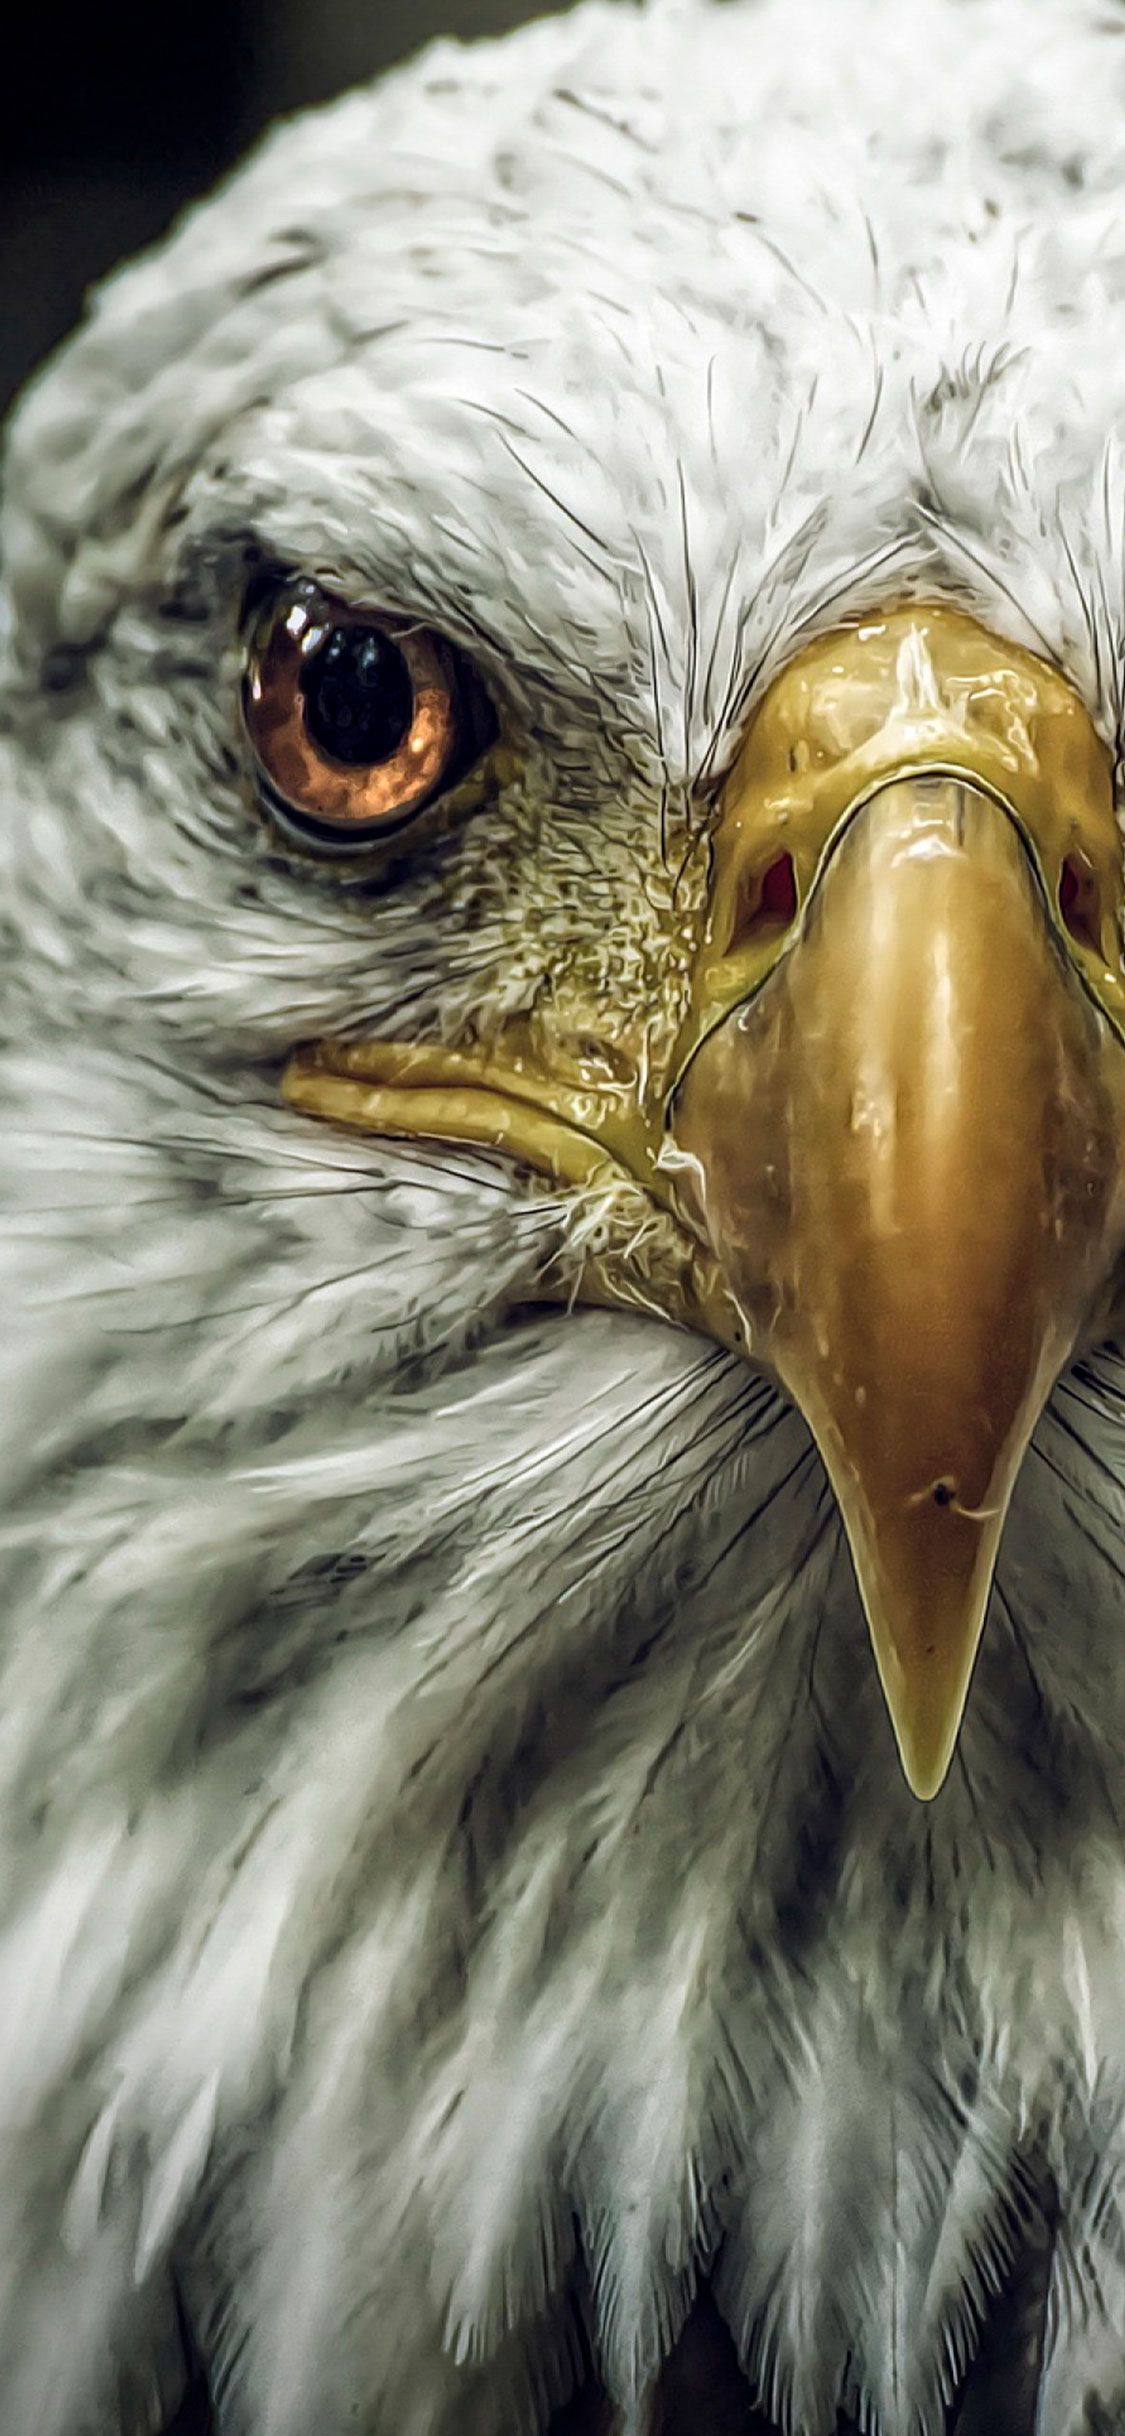 Eagle Wallpaper 4k iPhone. mywallpaper site. Eagle wallpaper, Eagle picture, Pet birds